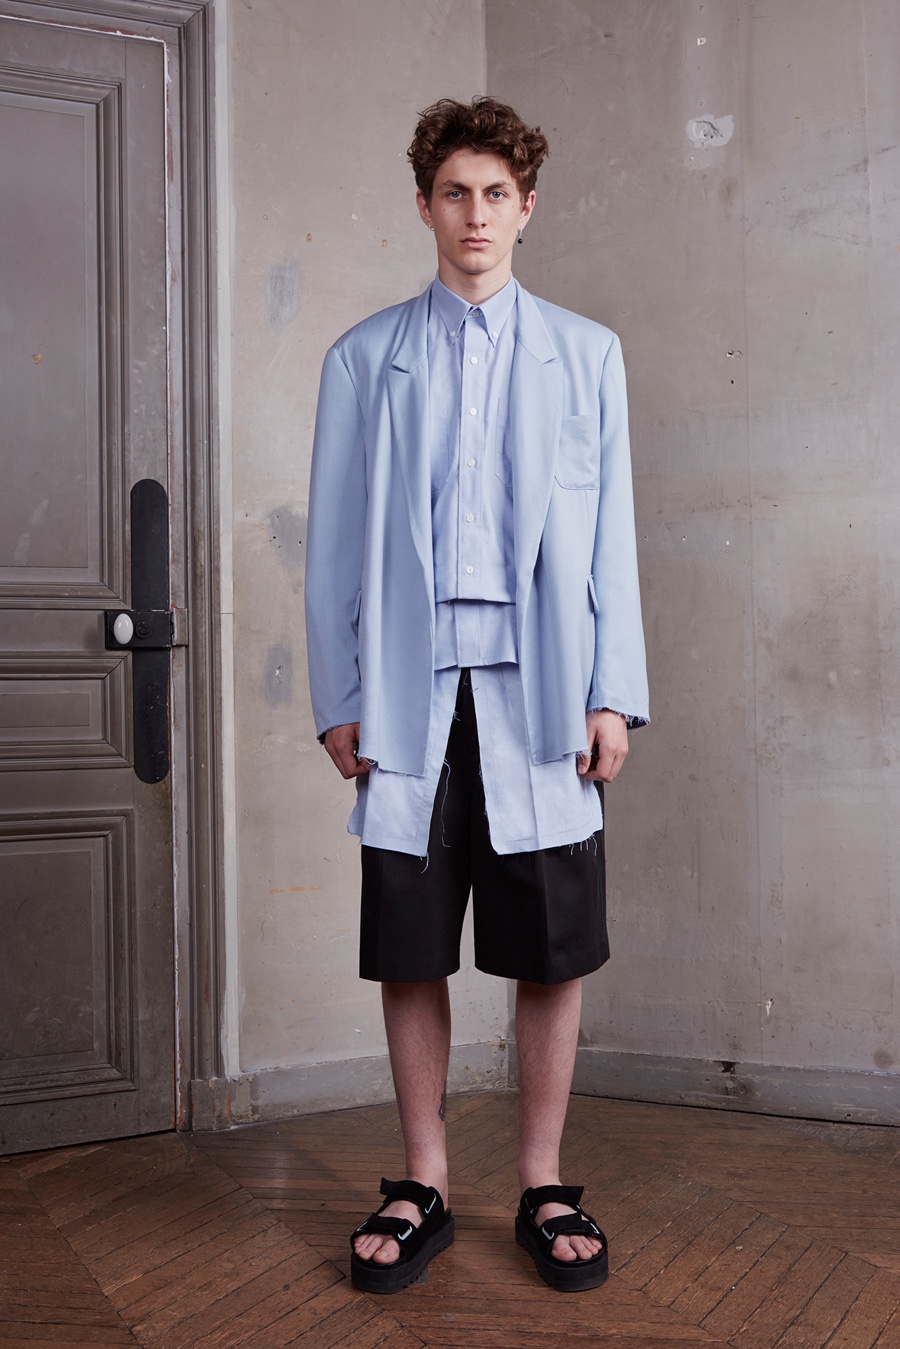 Off-White Spring/Summer 2016 Menswear Collection | Paris Fashion Week